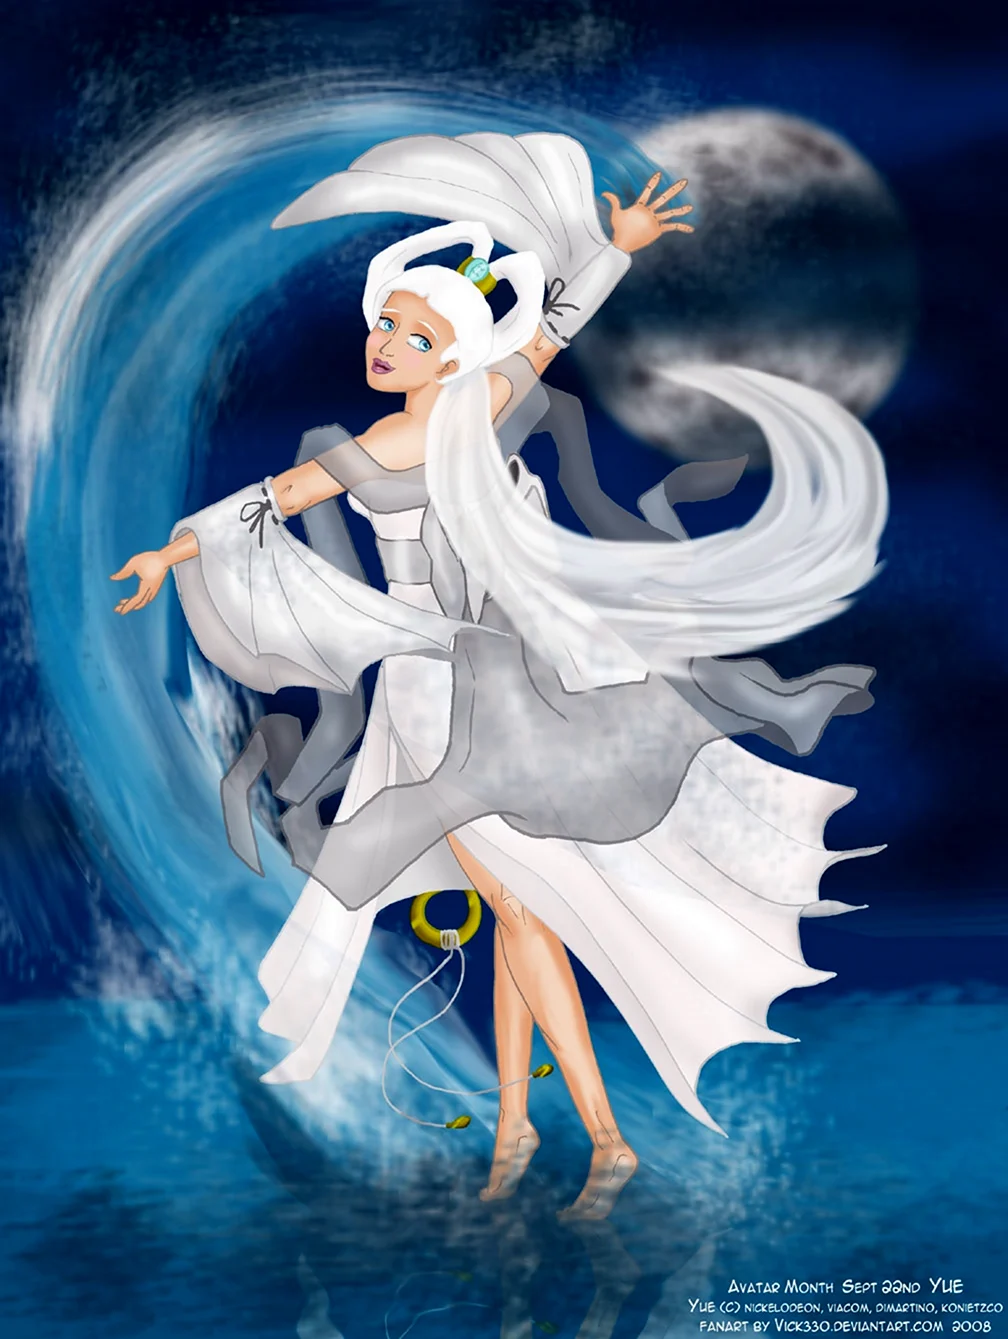 Принцесса Юэ аватар. Картинка из мультфильма